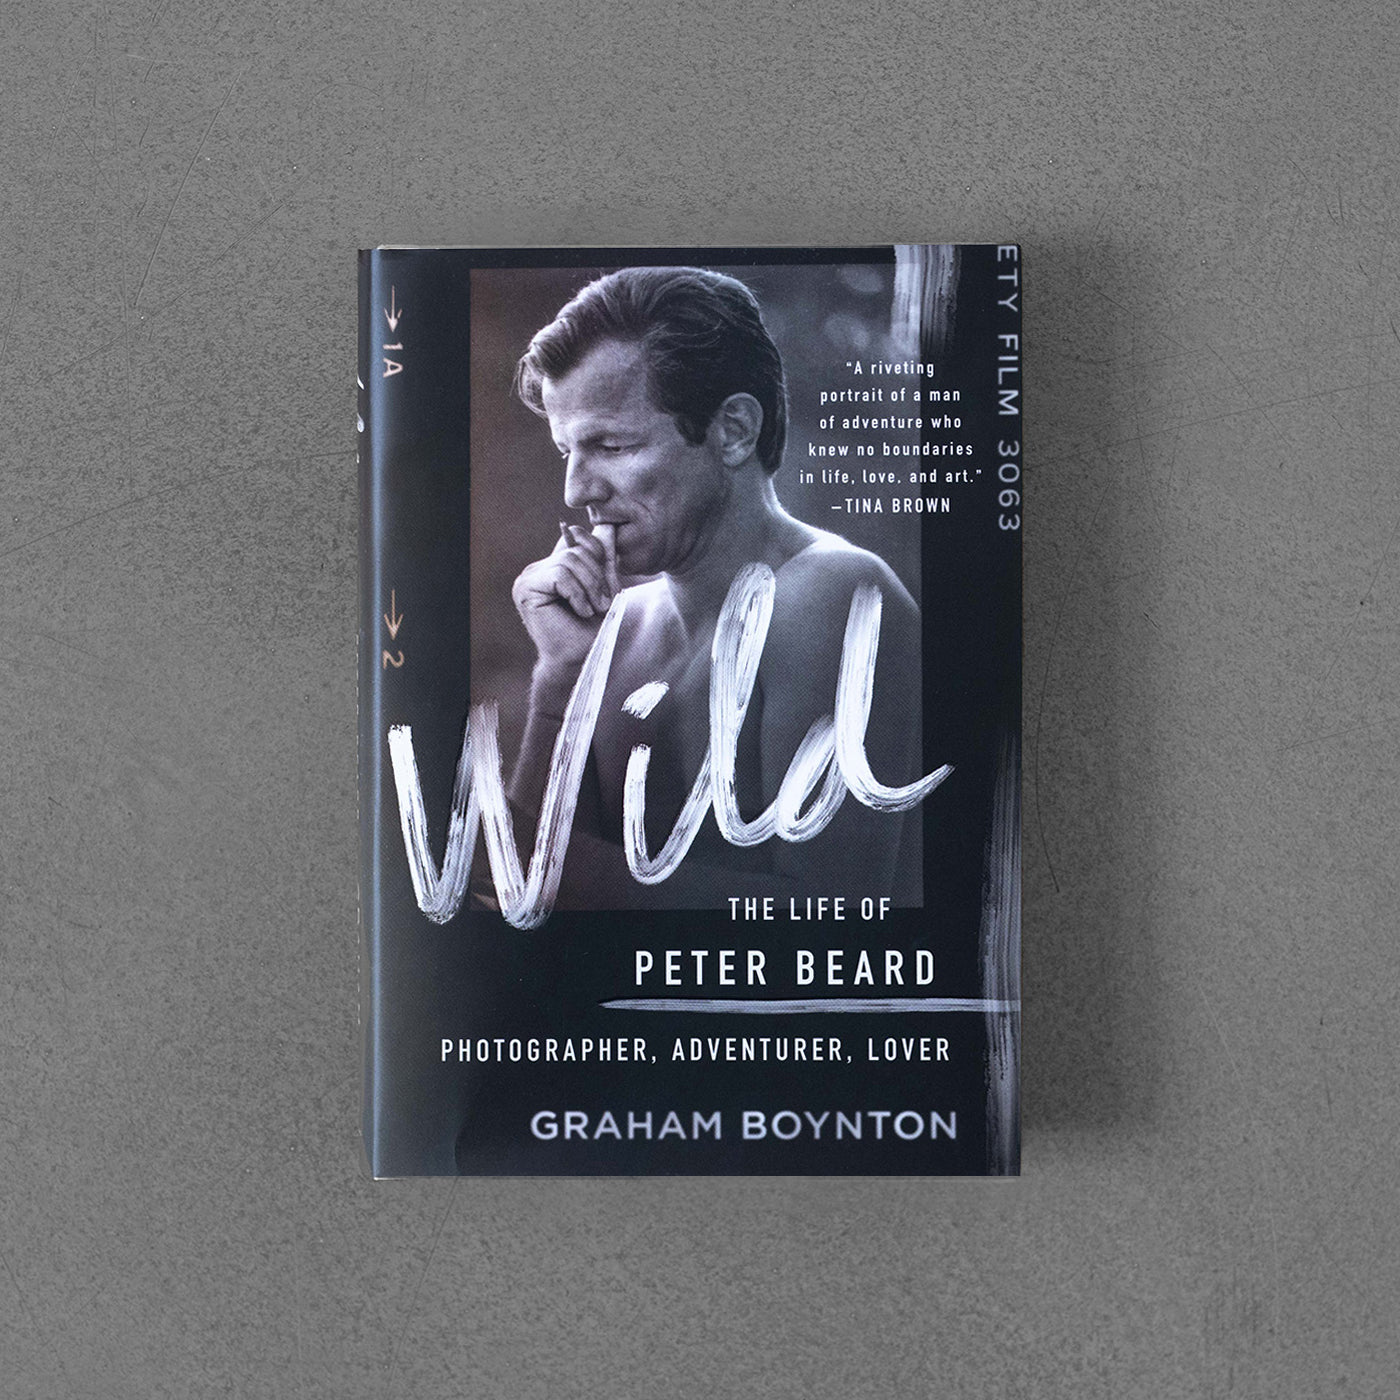 Wild: The Life of Peter Beard: Photographer, Adventurer, Lover